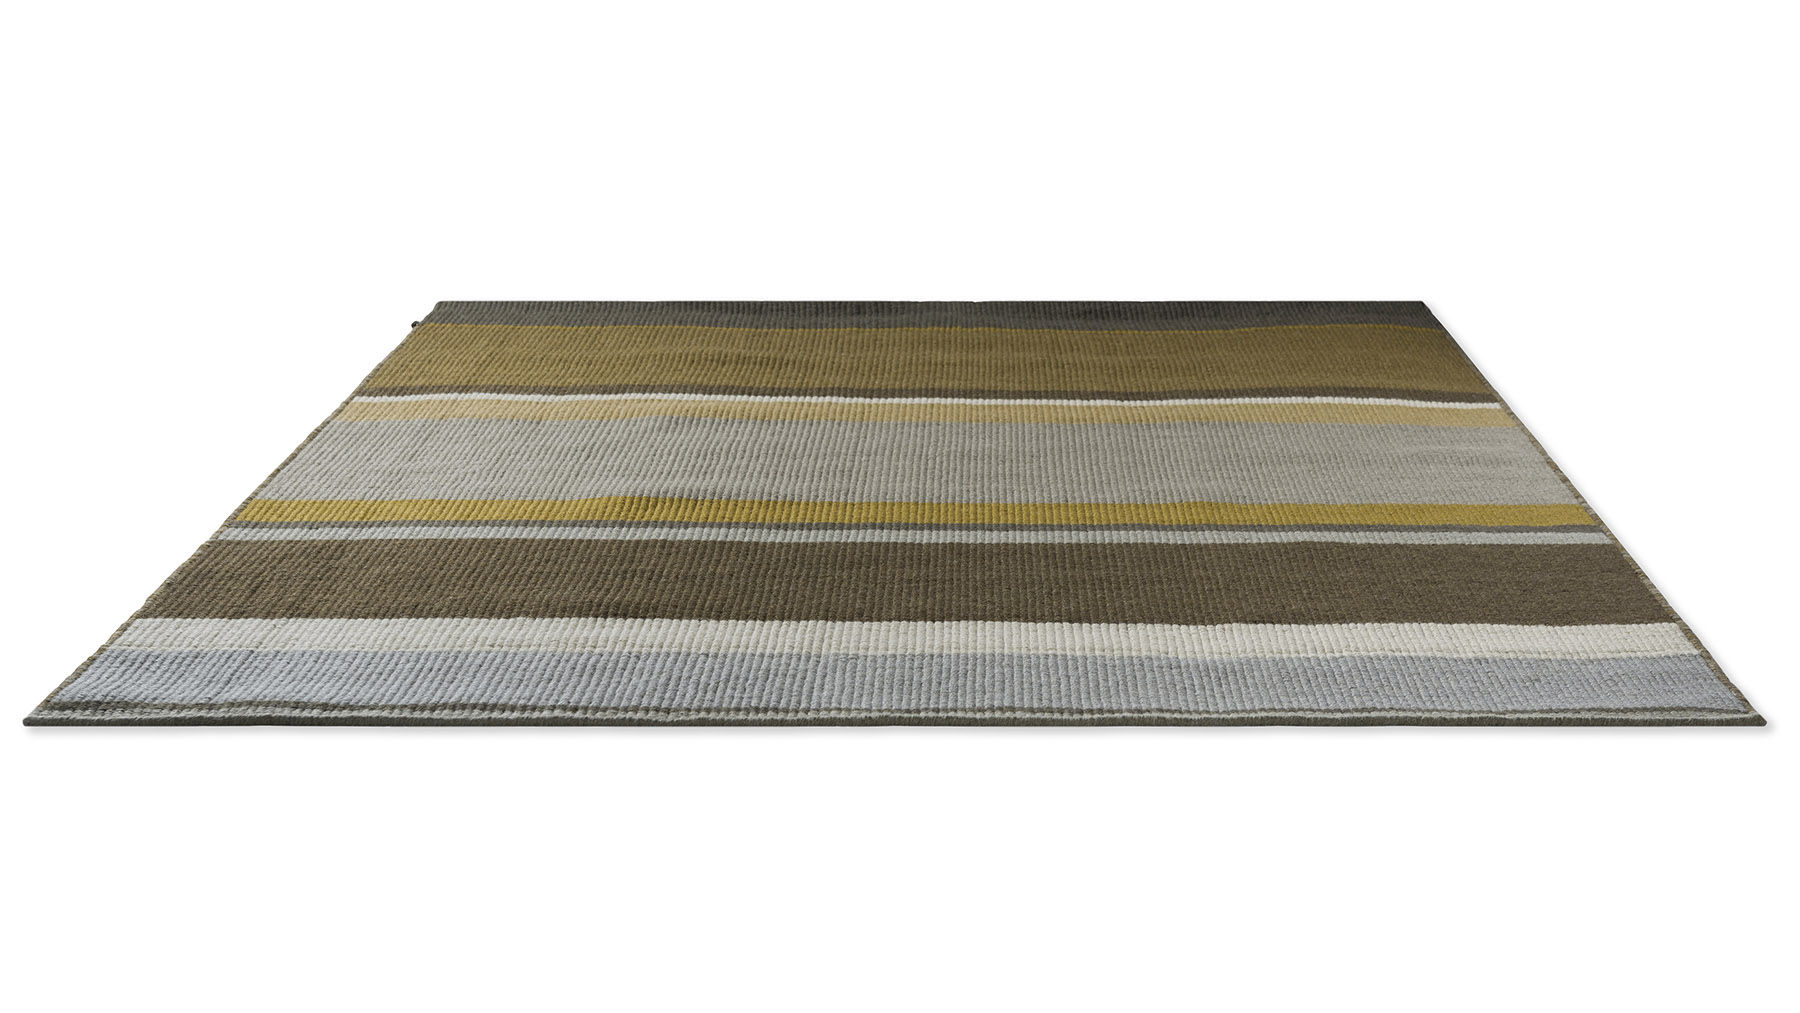 Artisan Stack Ochre Handwoven Rug ☞ Size: 5' 3" x 7' 7" (160 x 230 cm)